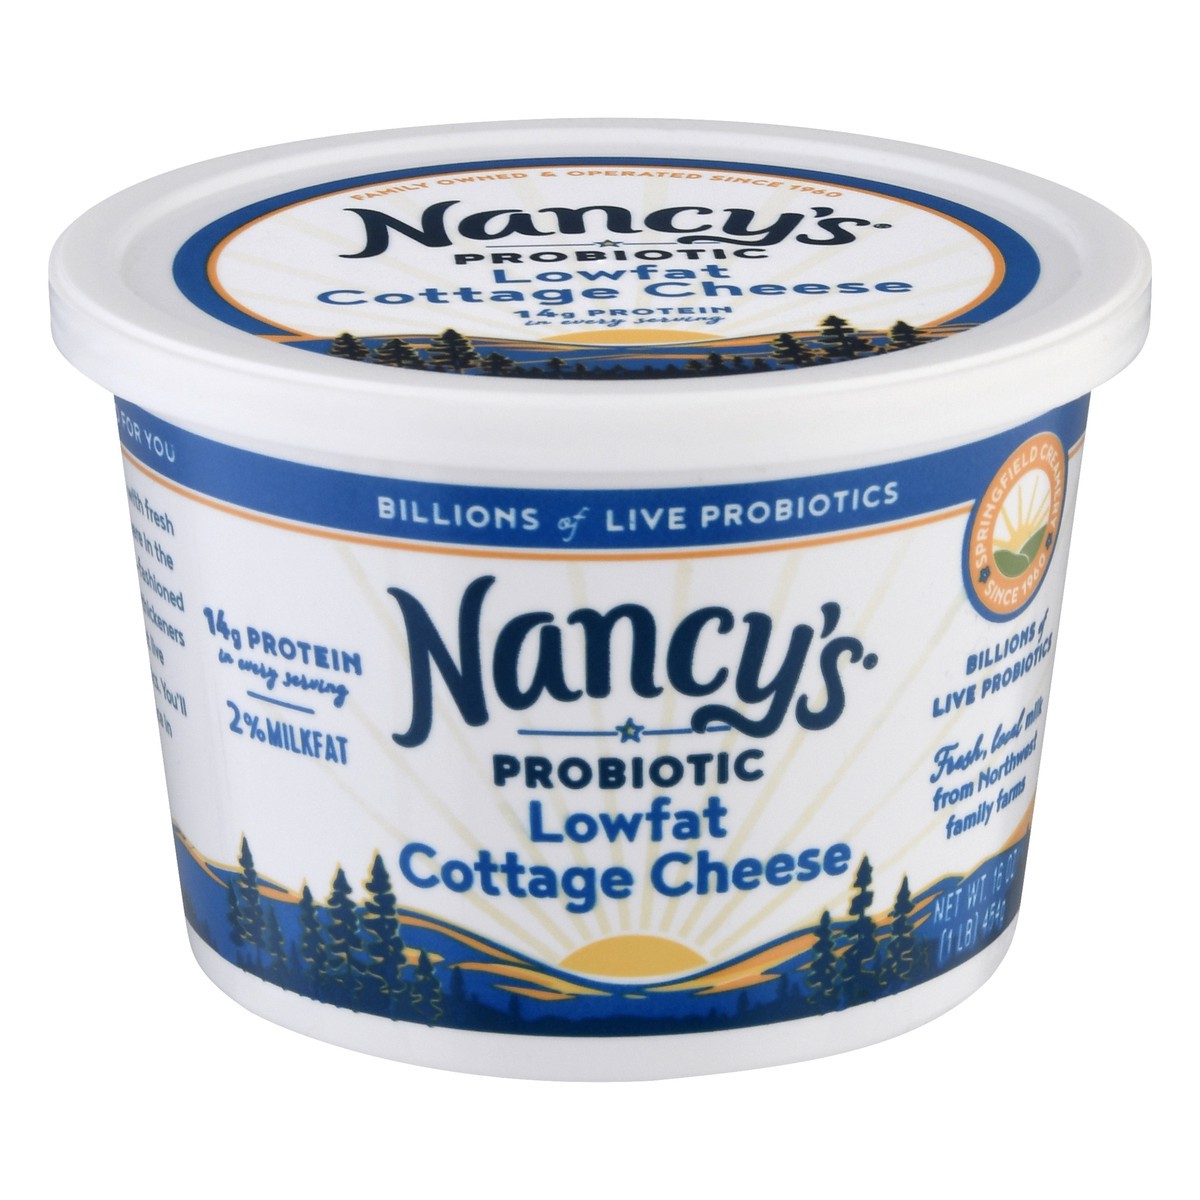 slide 1 of 9, Nancy's Probiotic Lowfat 2% Milkfat Cottage Cheese 16 oz, 16 oz